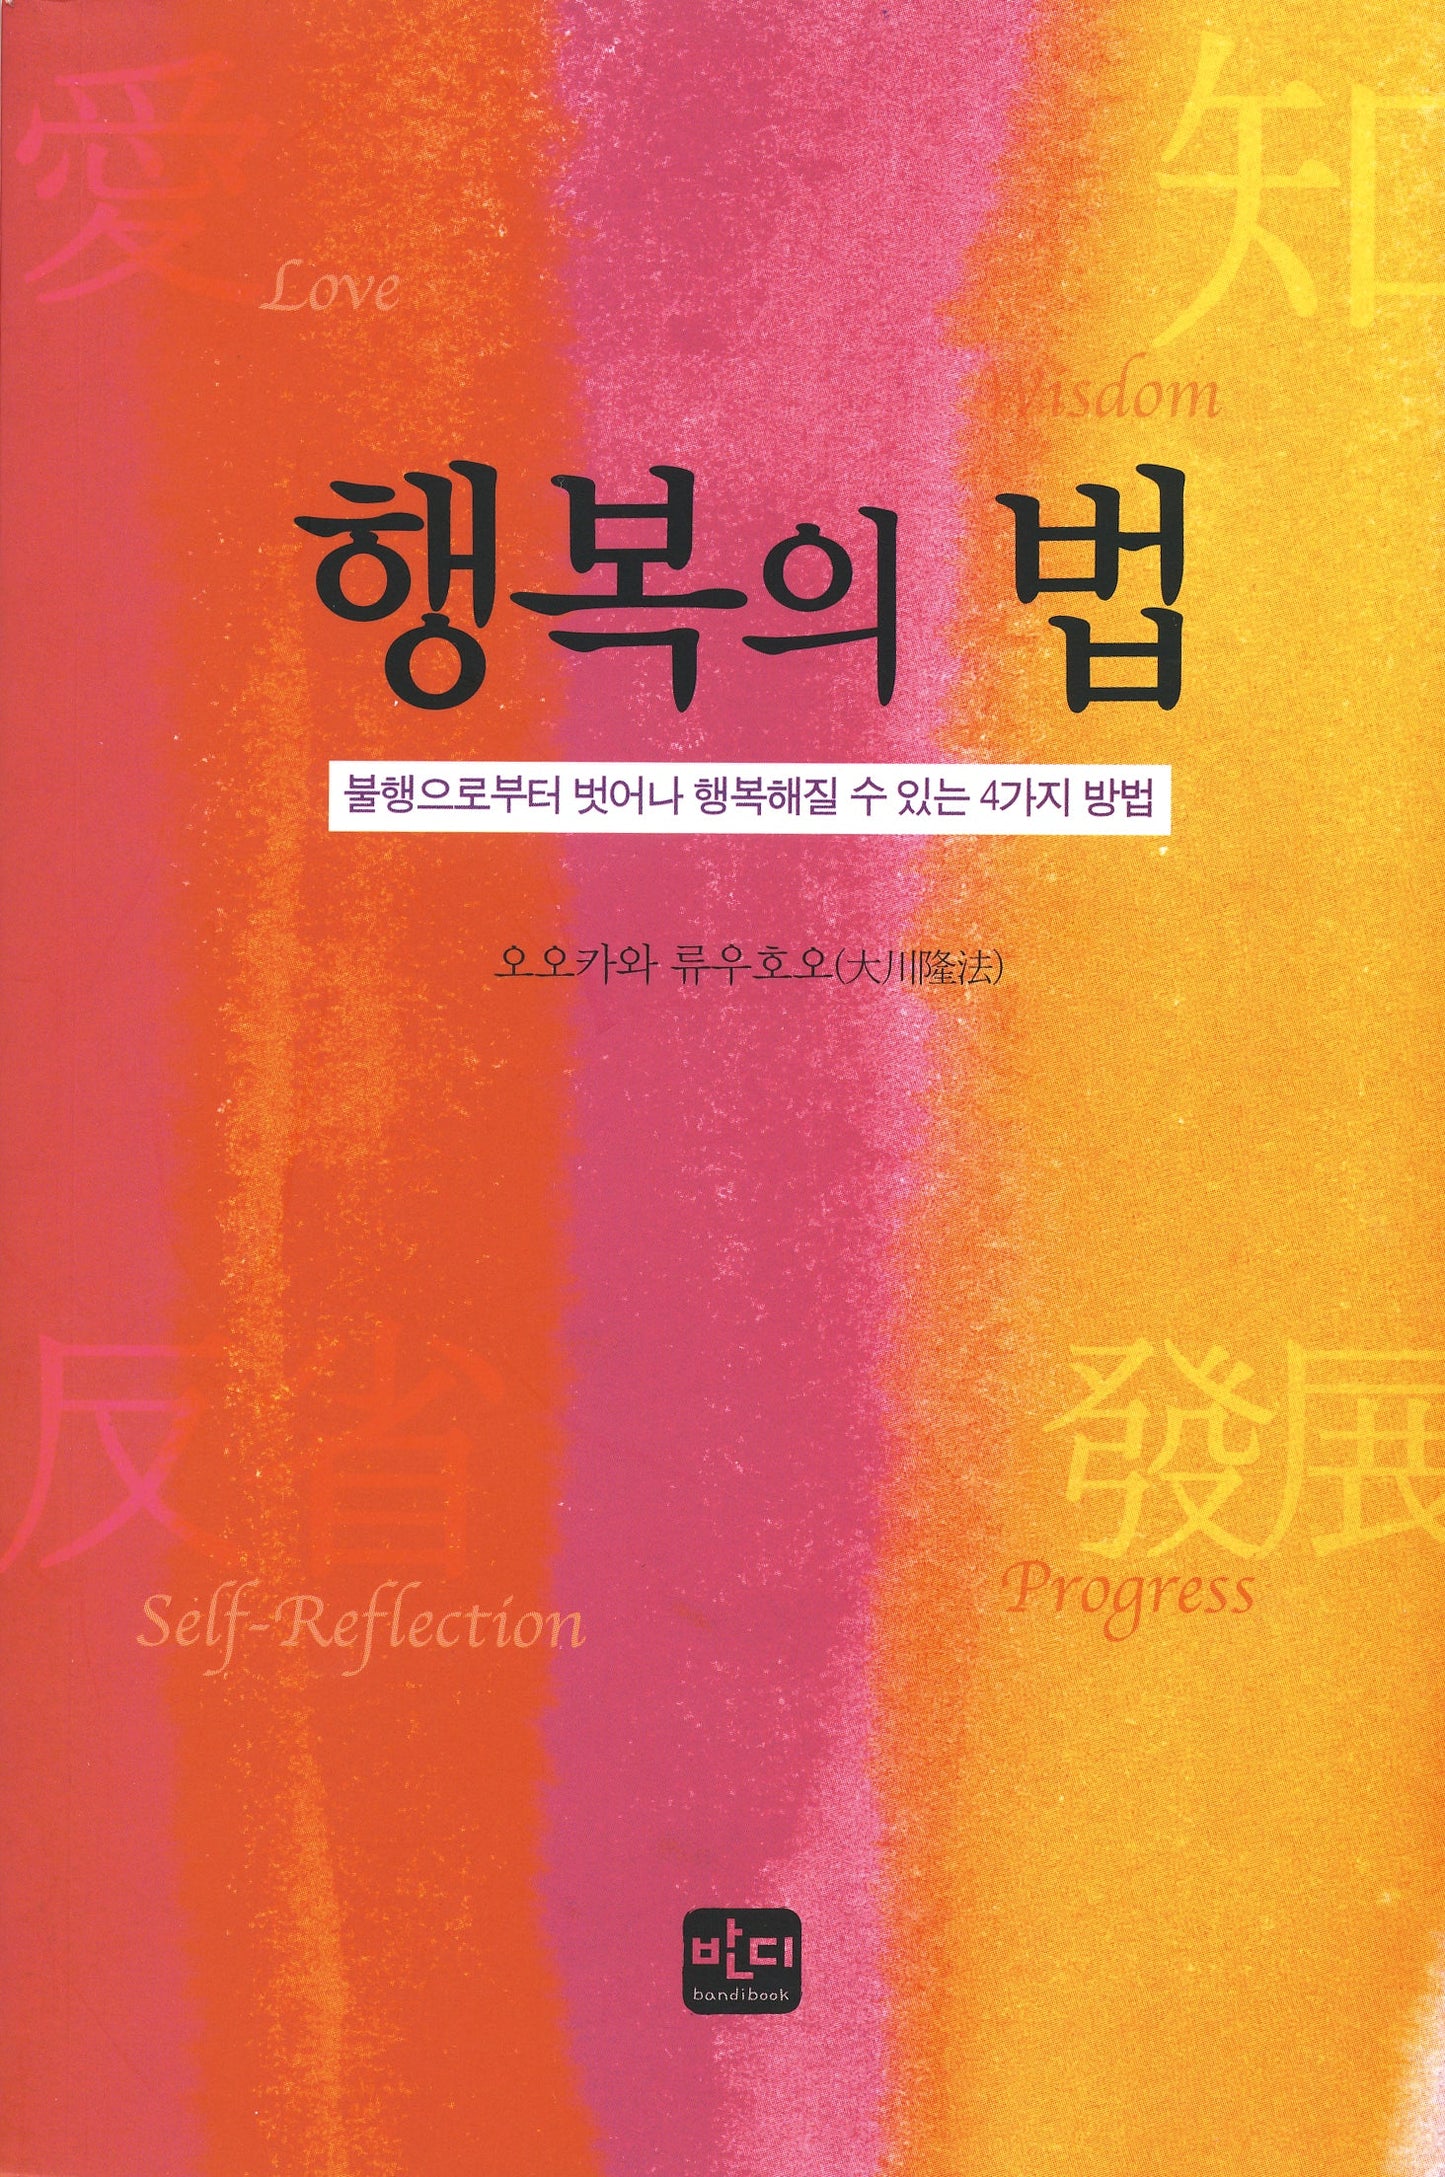 Book, The Laws of Happiness : Love, Wisdom, Self-Reflection and Progress, Ryuho Okawa, Korean - IRH Press International